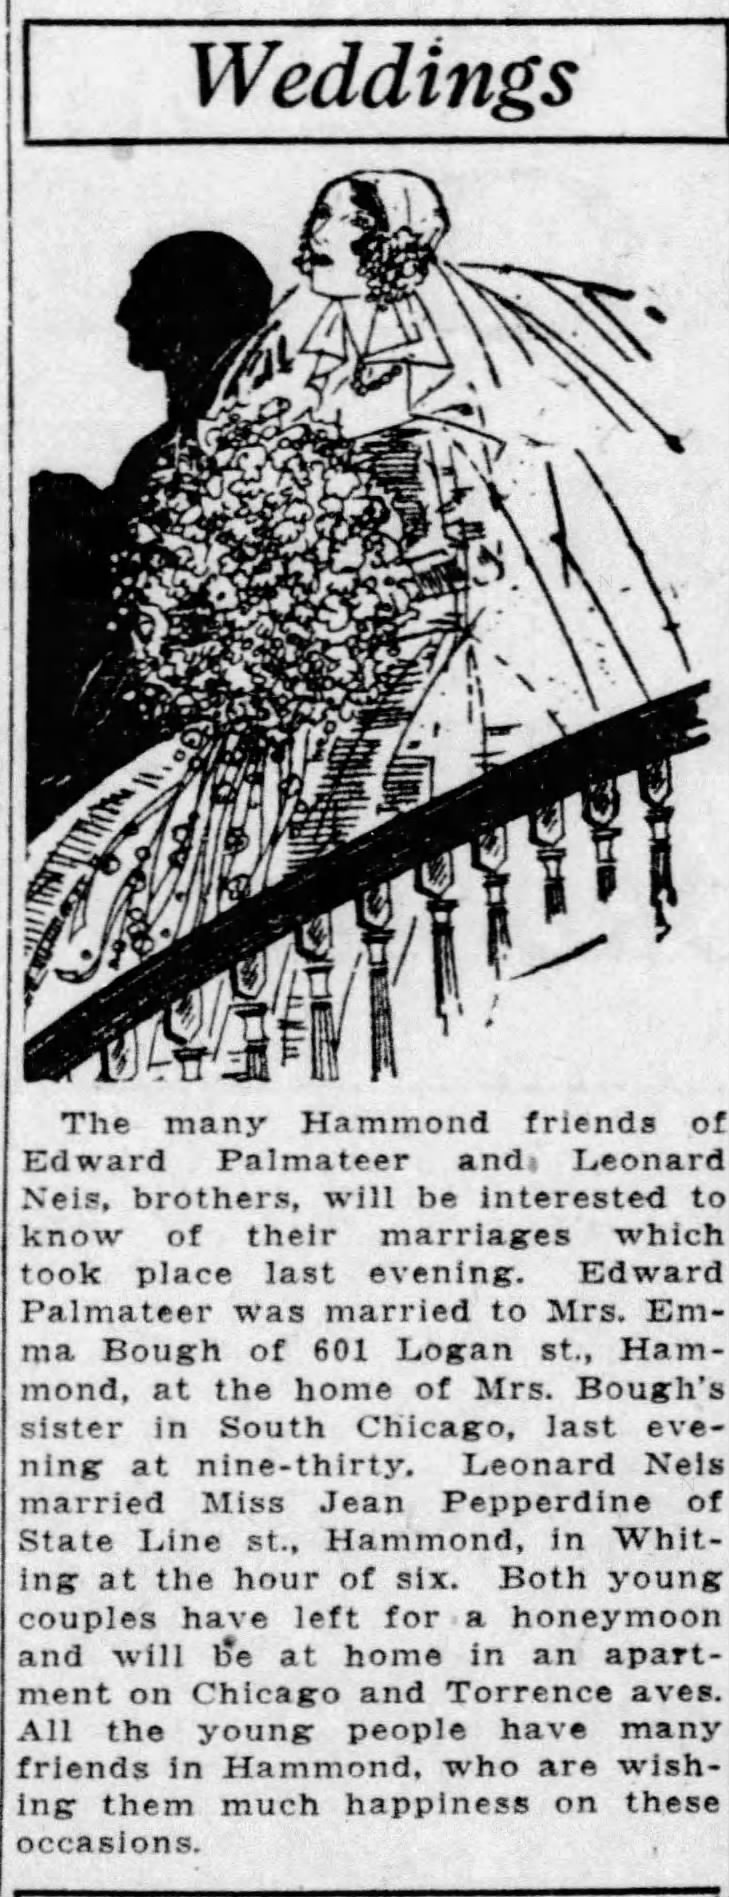 Edward Palmateer married Mrs Emma Bough - 3 June 1927